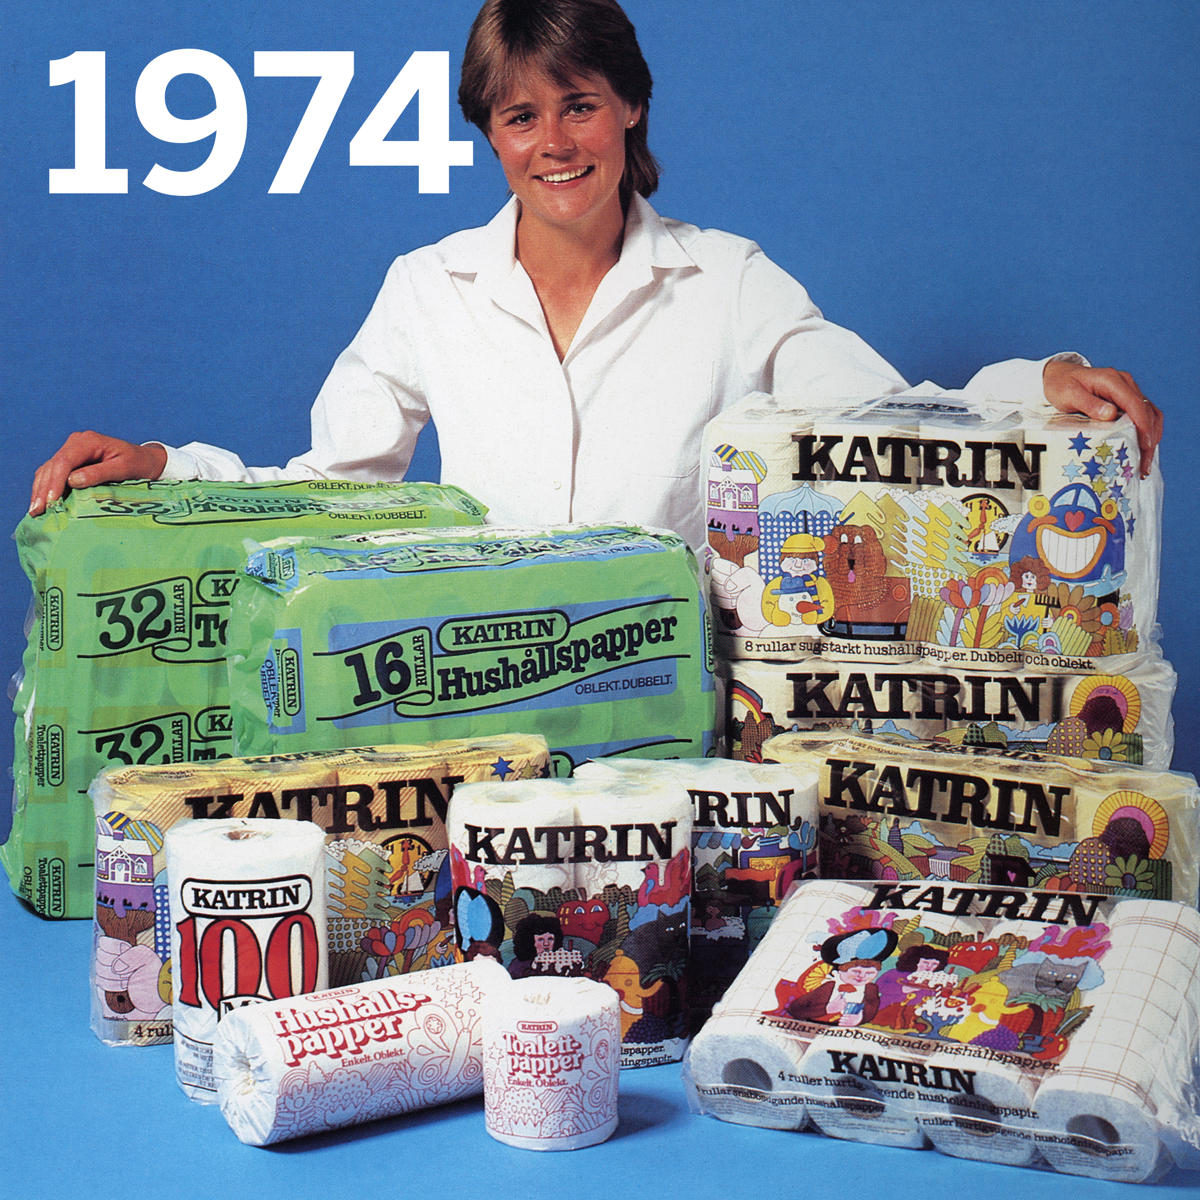 The Katrin brand was born